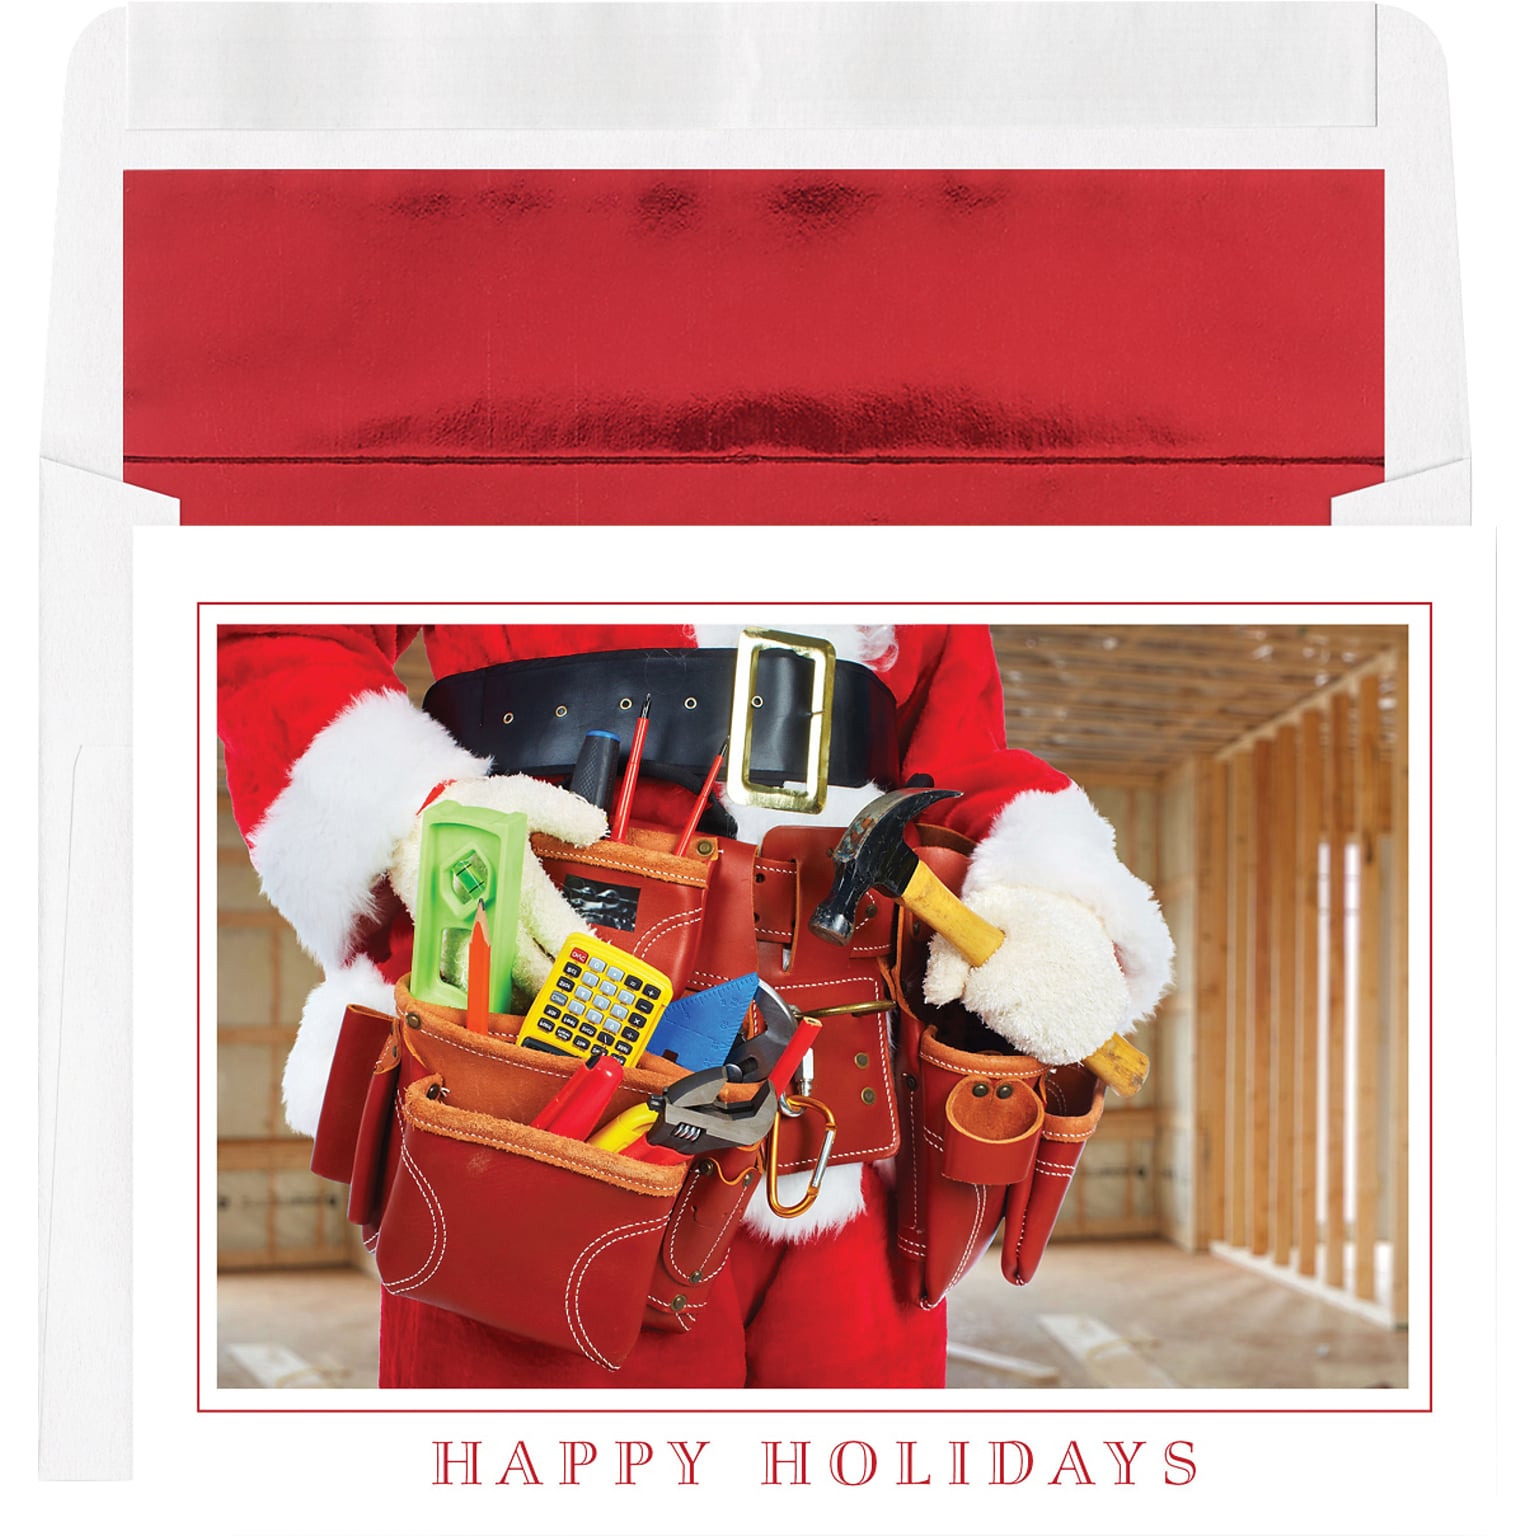 Custom Happy Holidays Santa Handy Man Tool Belt Cards, with Envelopes, 7-7/8 x 5-5/8, 25 Cards per Set